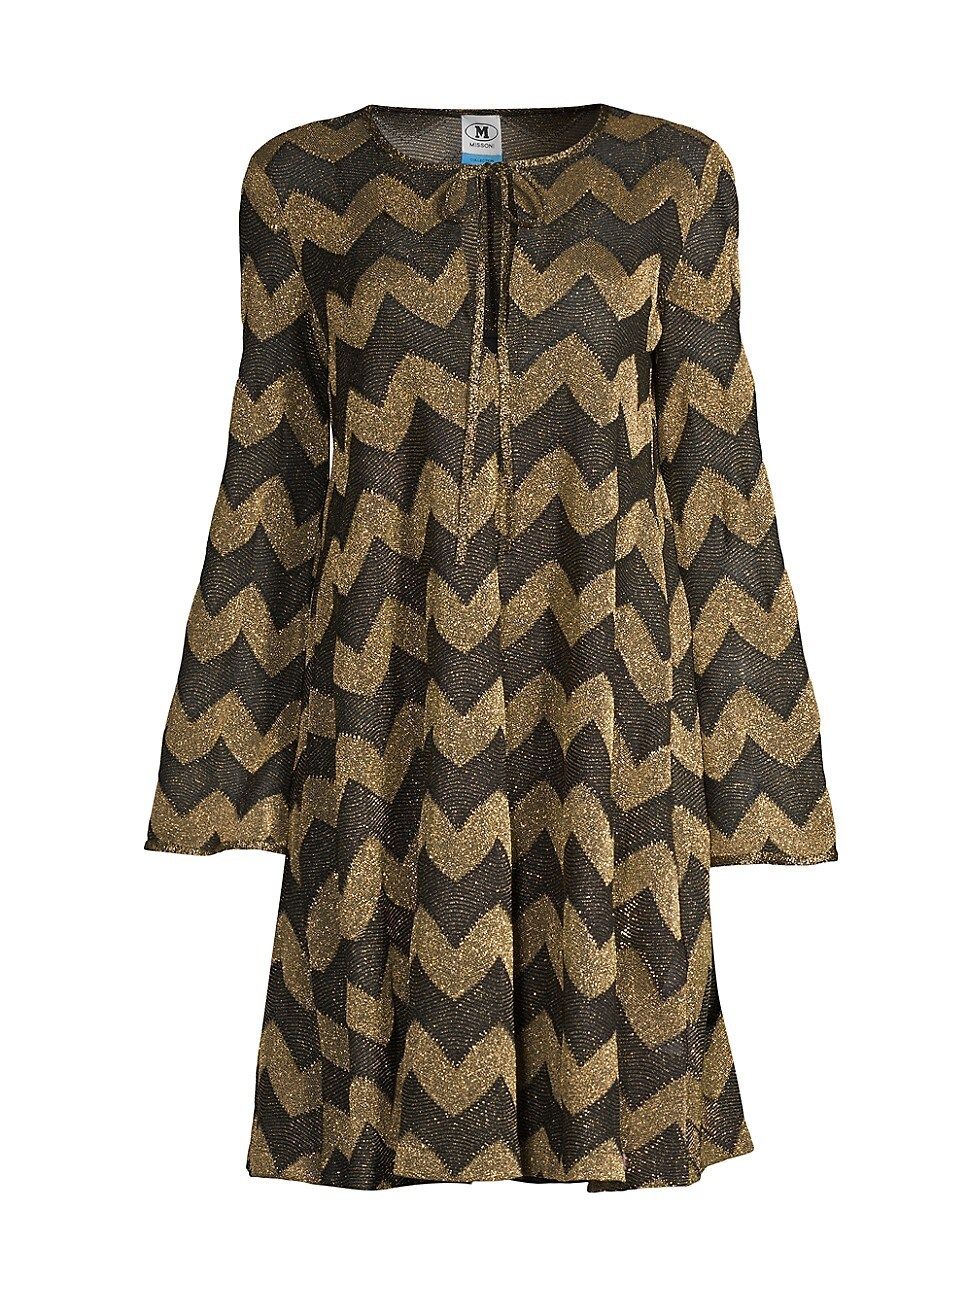 M Missoni Women's Lurex Jersey Dress - Black Gold - Size Small | Saks Fifth Avenue